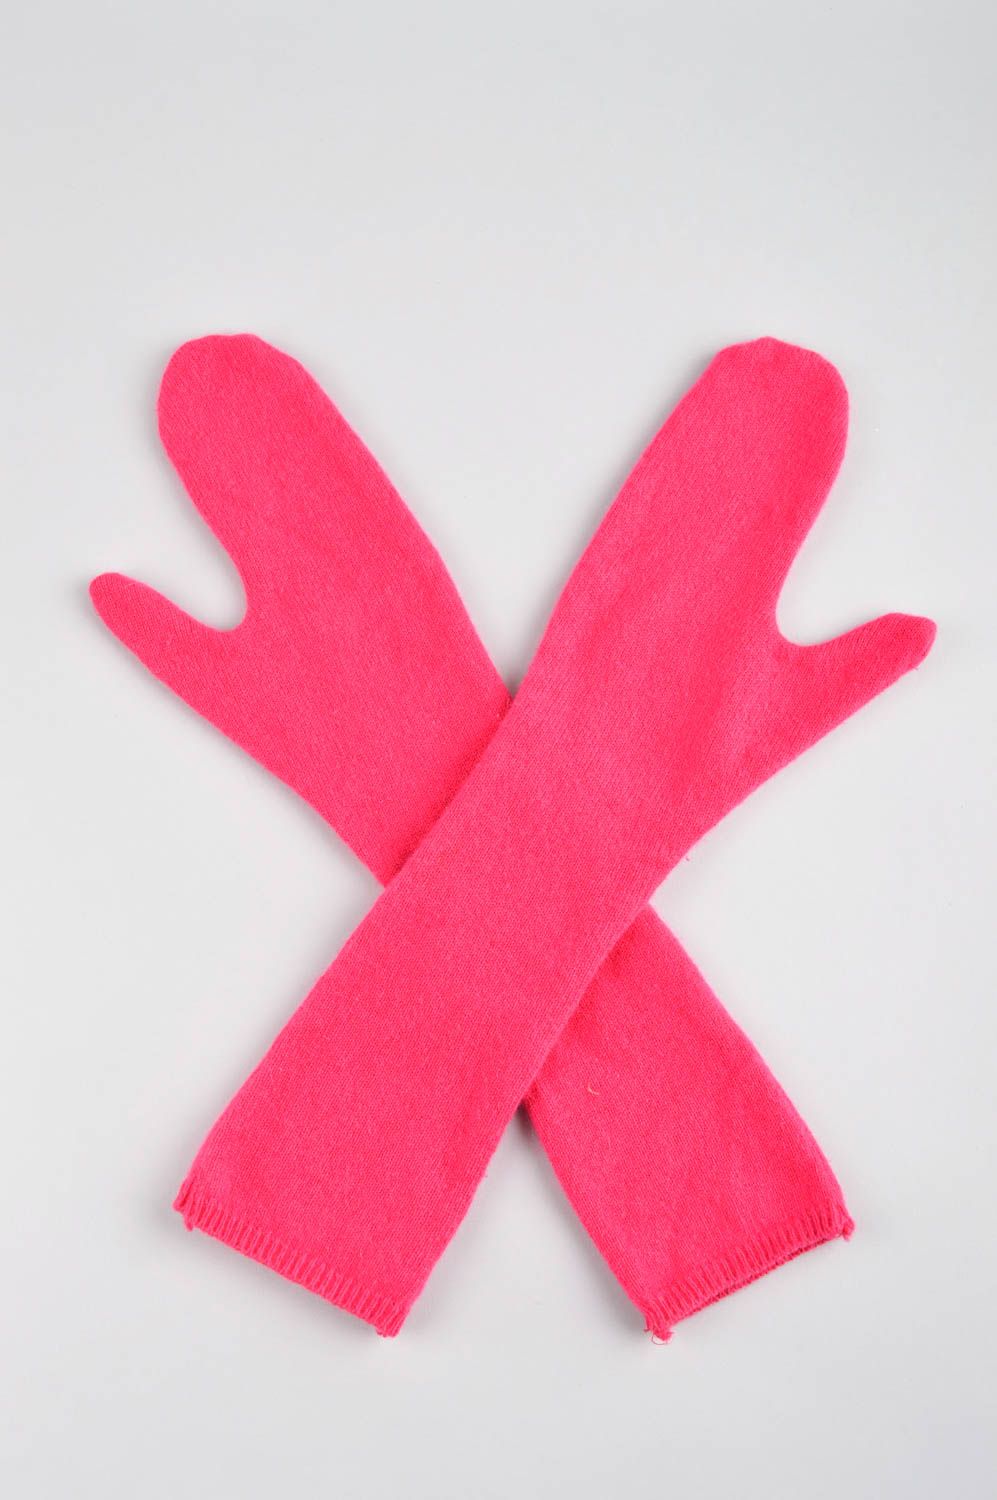 Handmade mittens pink winter hat designer winter accessory set for women photo 5